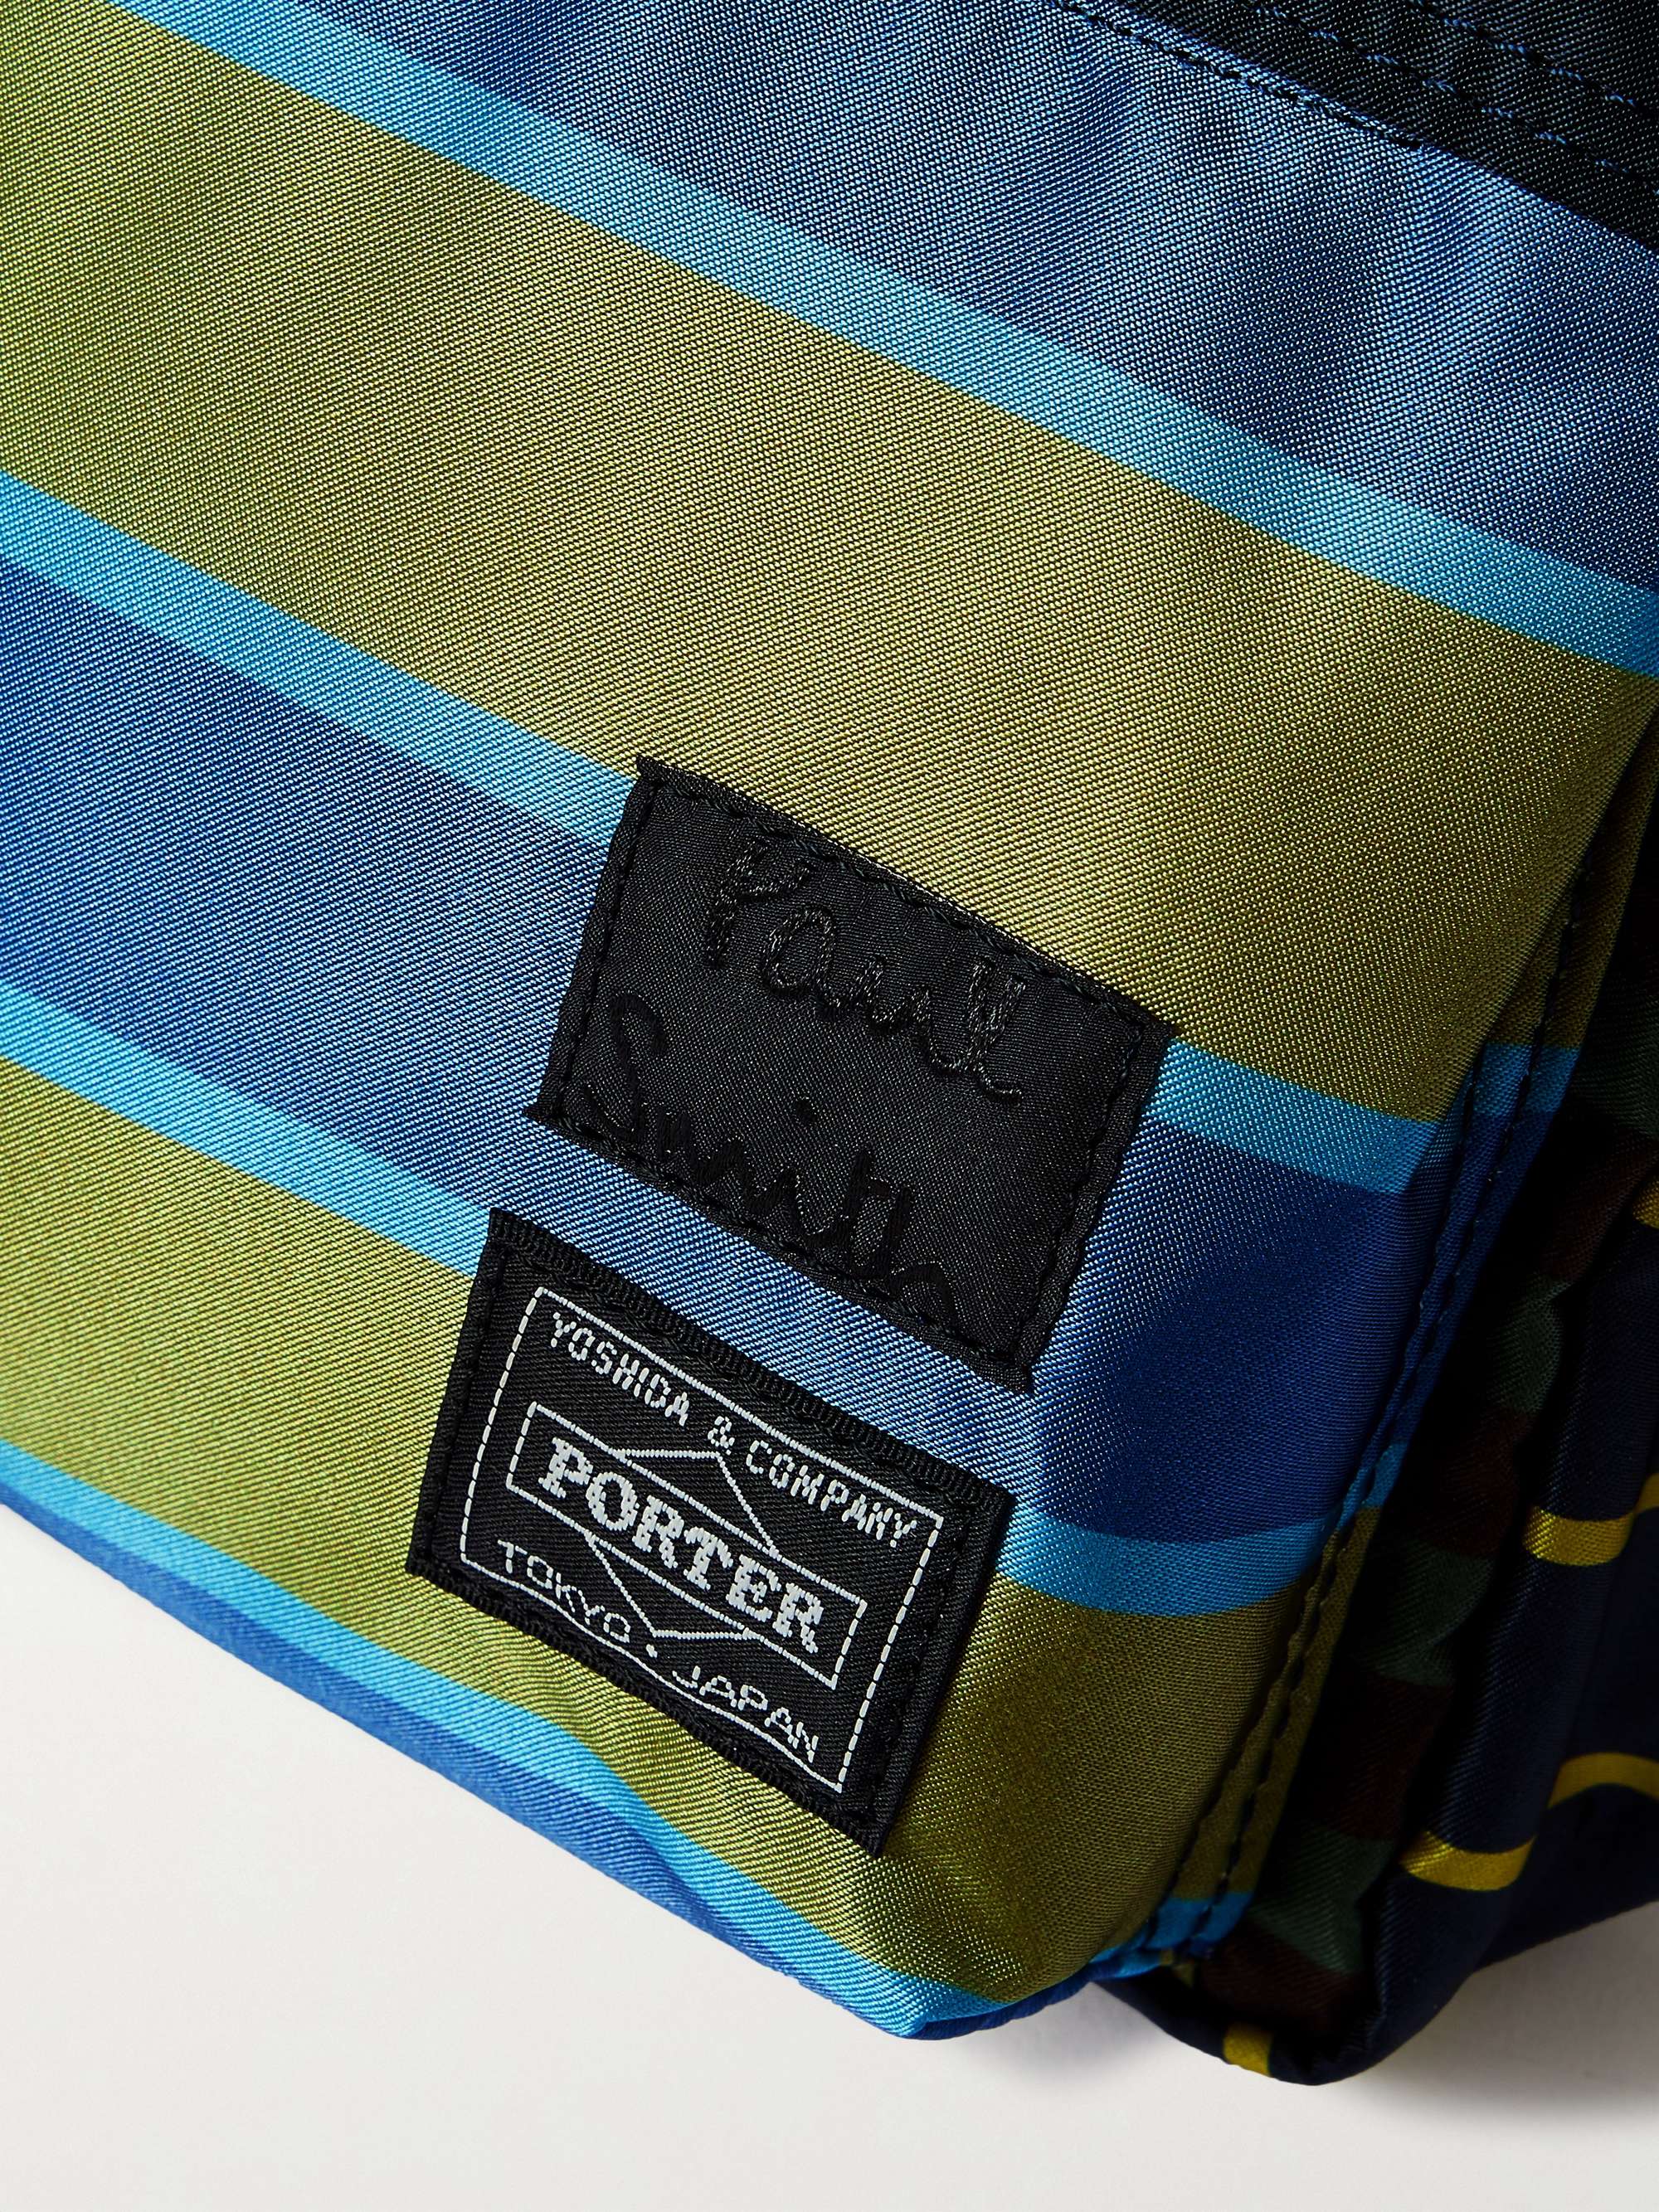 PAUL SMITH + Porter-Yoshida & Co Striped Nylon Messenger Bag